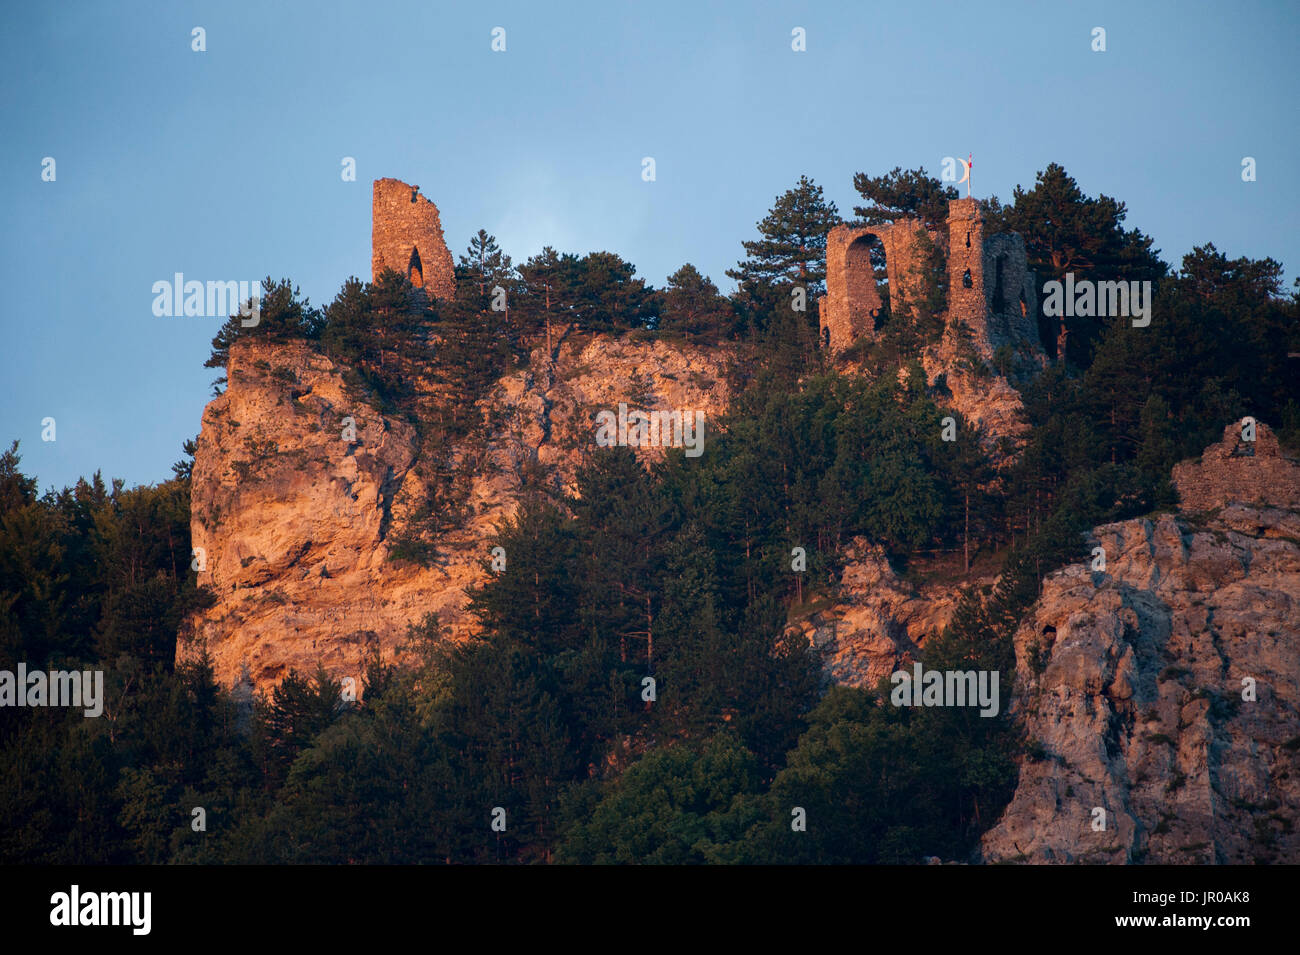 Ruins of a Castle on a Rockface in Nature Park Seebenstein Turkensturz in Gleissenfeld, Austria. 29 July 2016 © Wojciech Strozyk / Alamy Stock Photo * Stock Photo